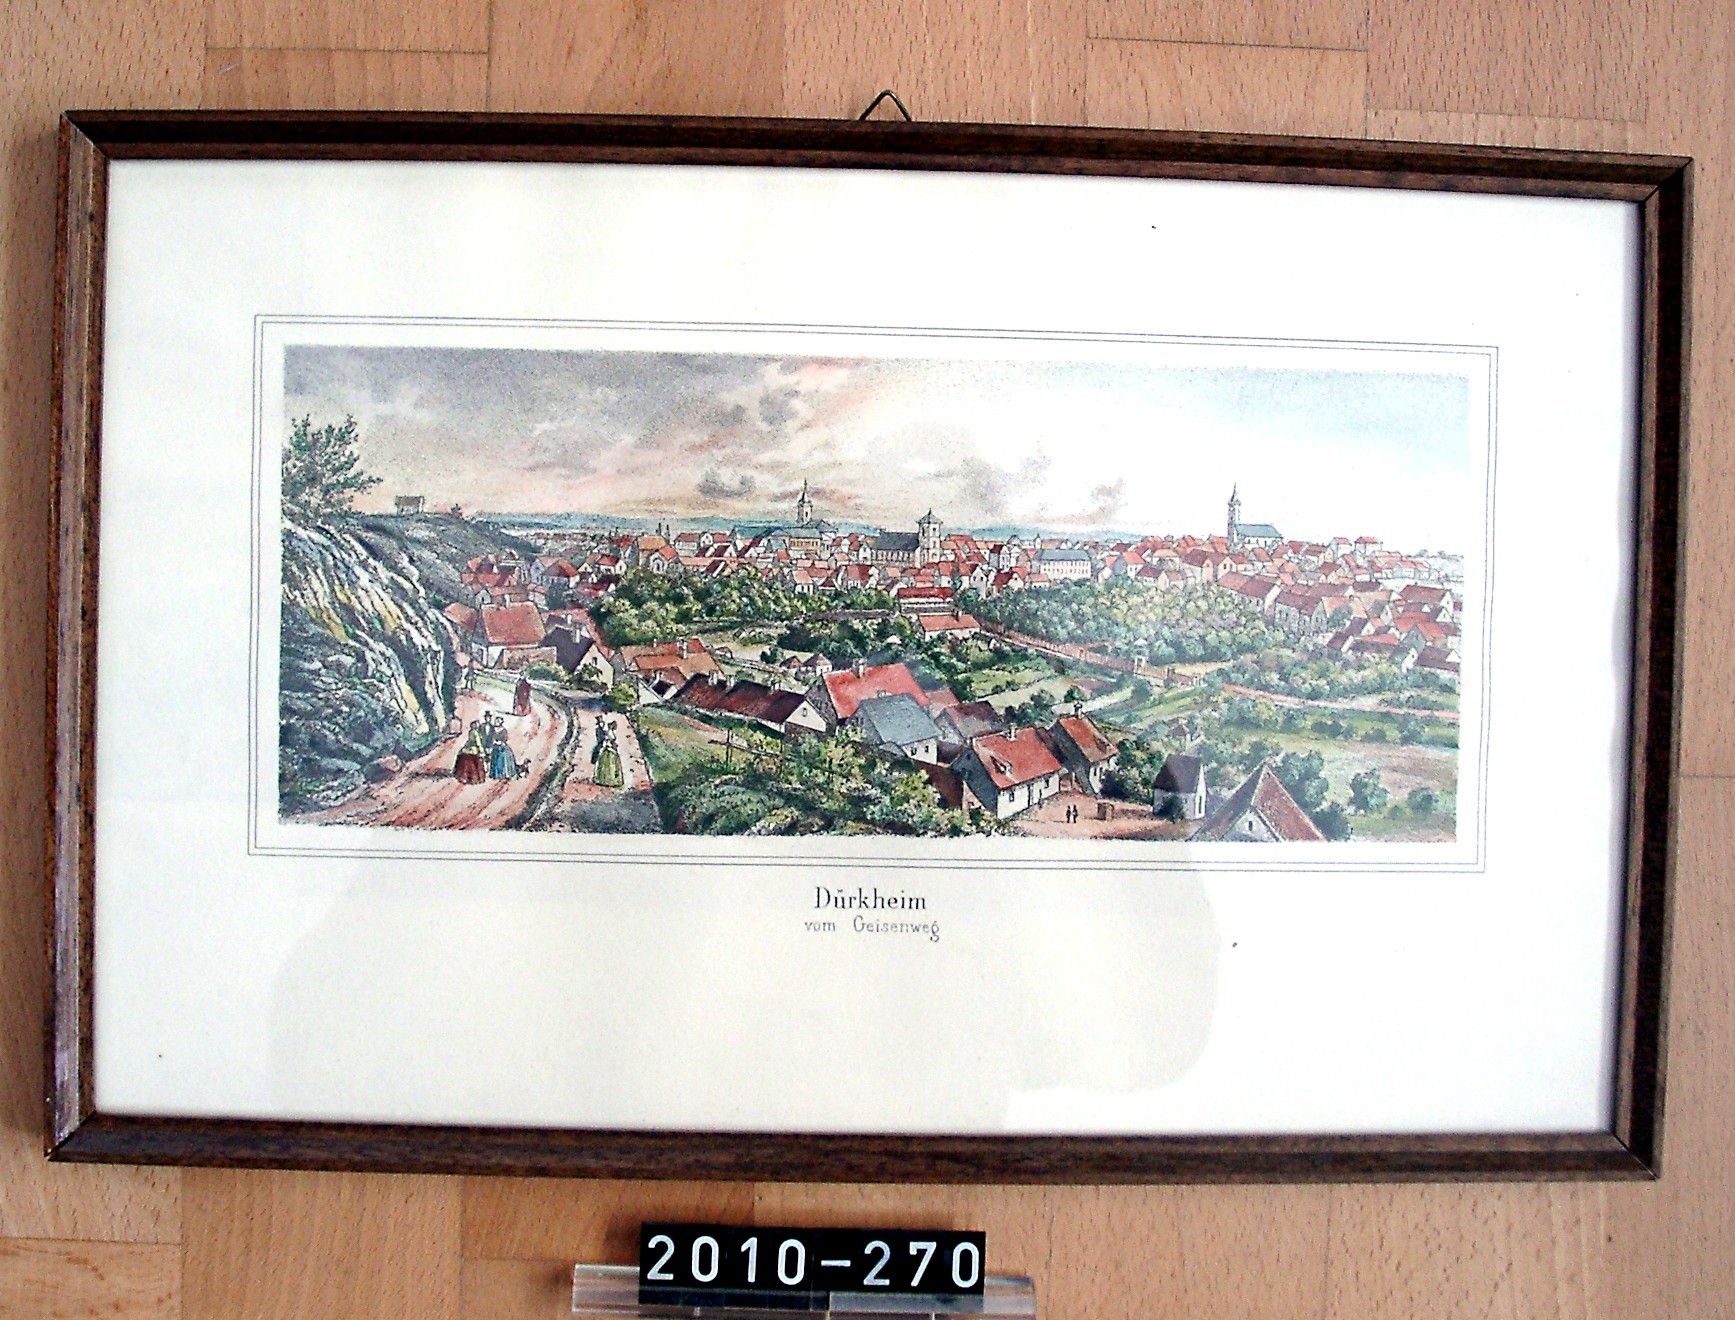 Tusche-Zeichnung, Aquarell: Dürkheim vom Geisenweg"; um 1900 (Stadtmuseum Bad Dürkheim, Museumsgesellschaft Bad Dürkheim e.V. CC BY-NC-SA)